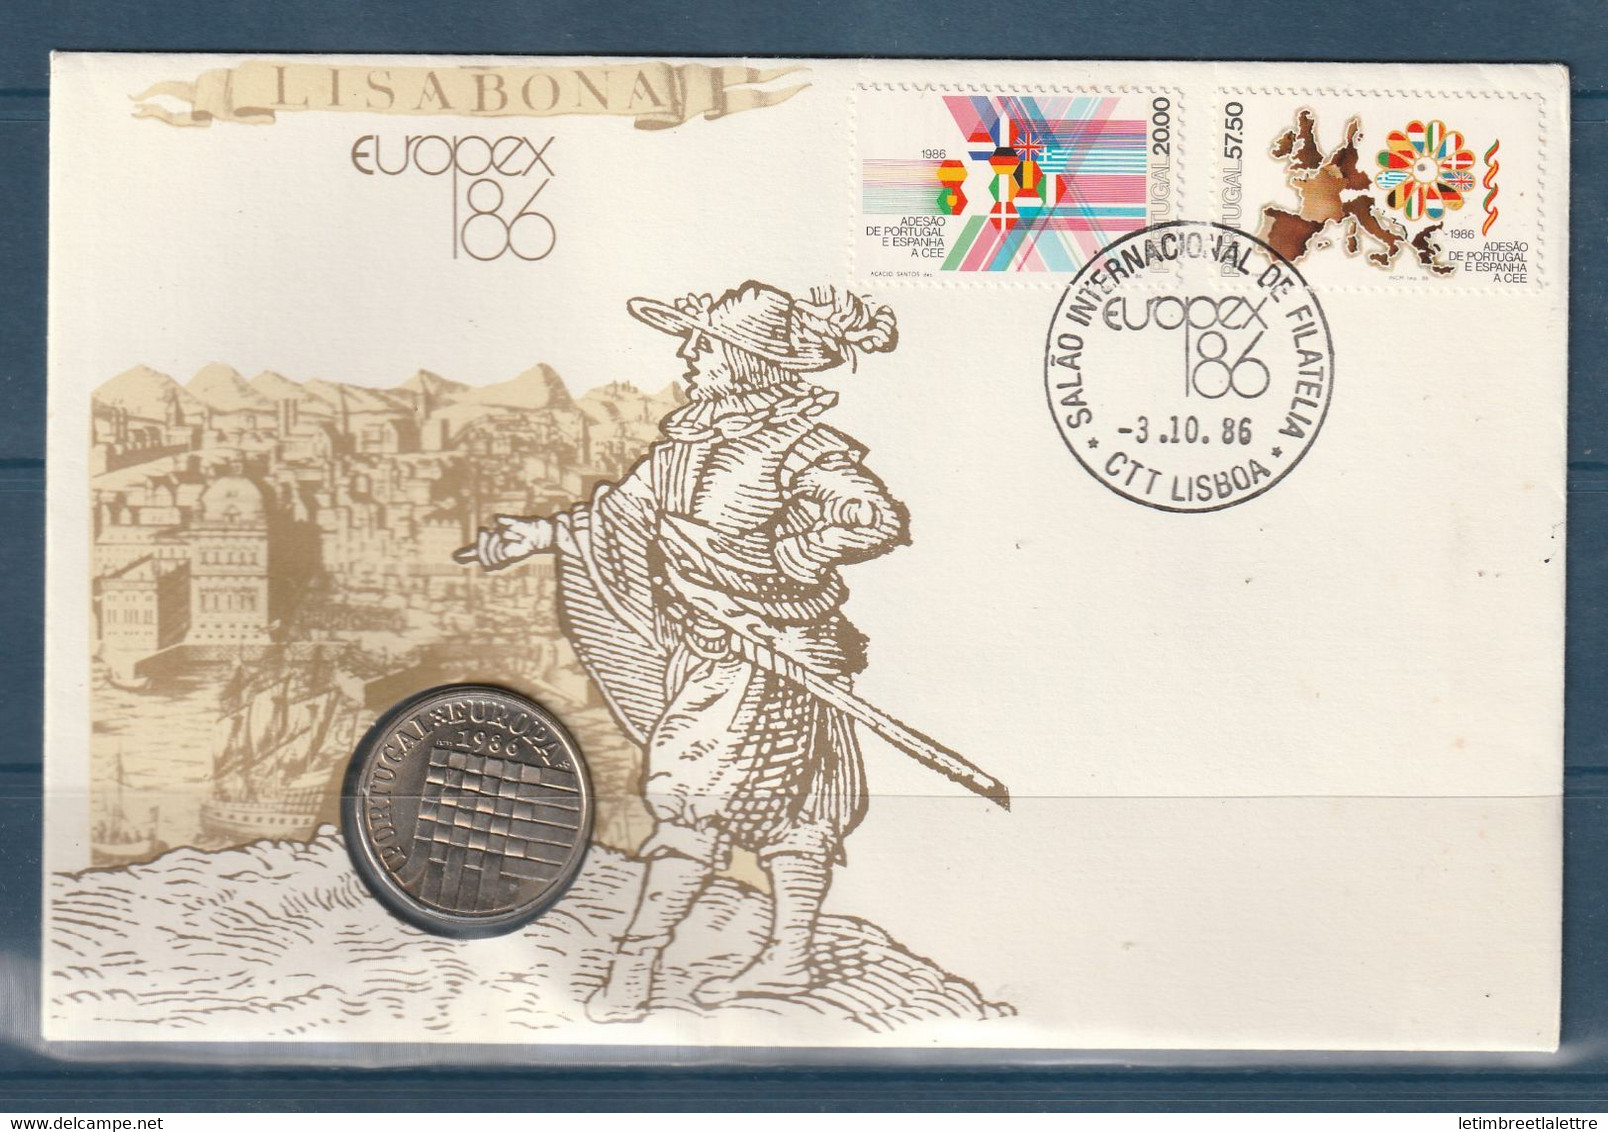 ⭐ Portugal - Europa - Enveloppe Monnaie - 25 Escudos - Adhésion à La CEE - Europex 1986 ⭐ - FDC